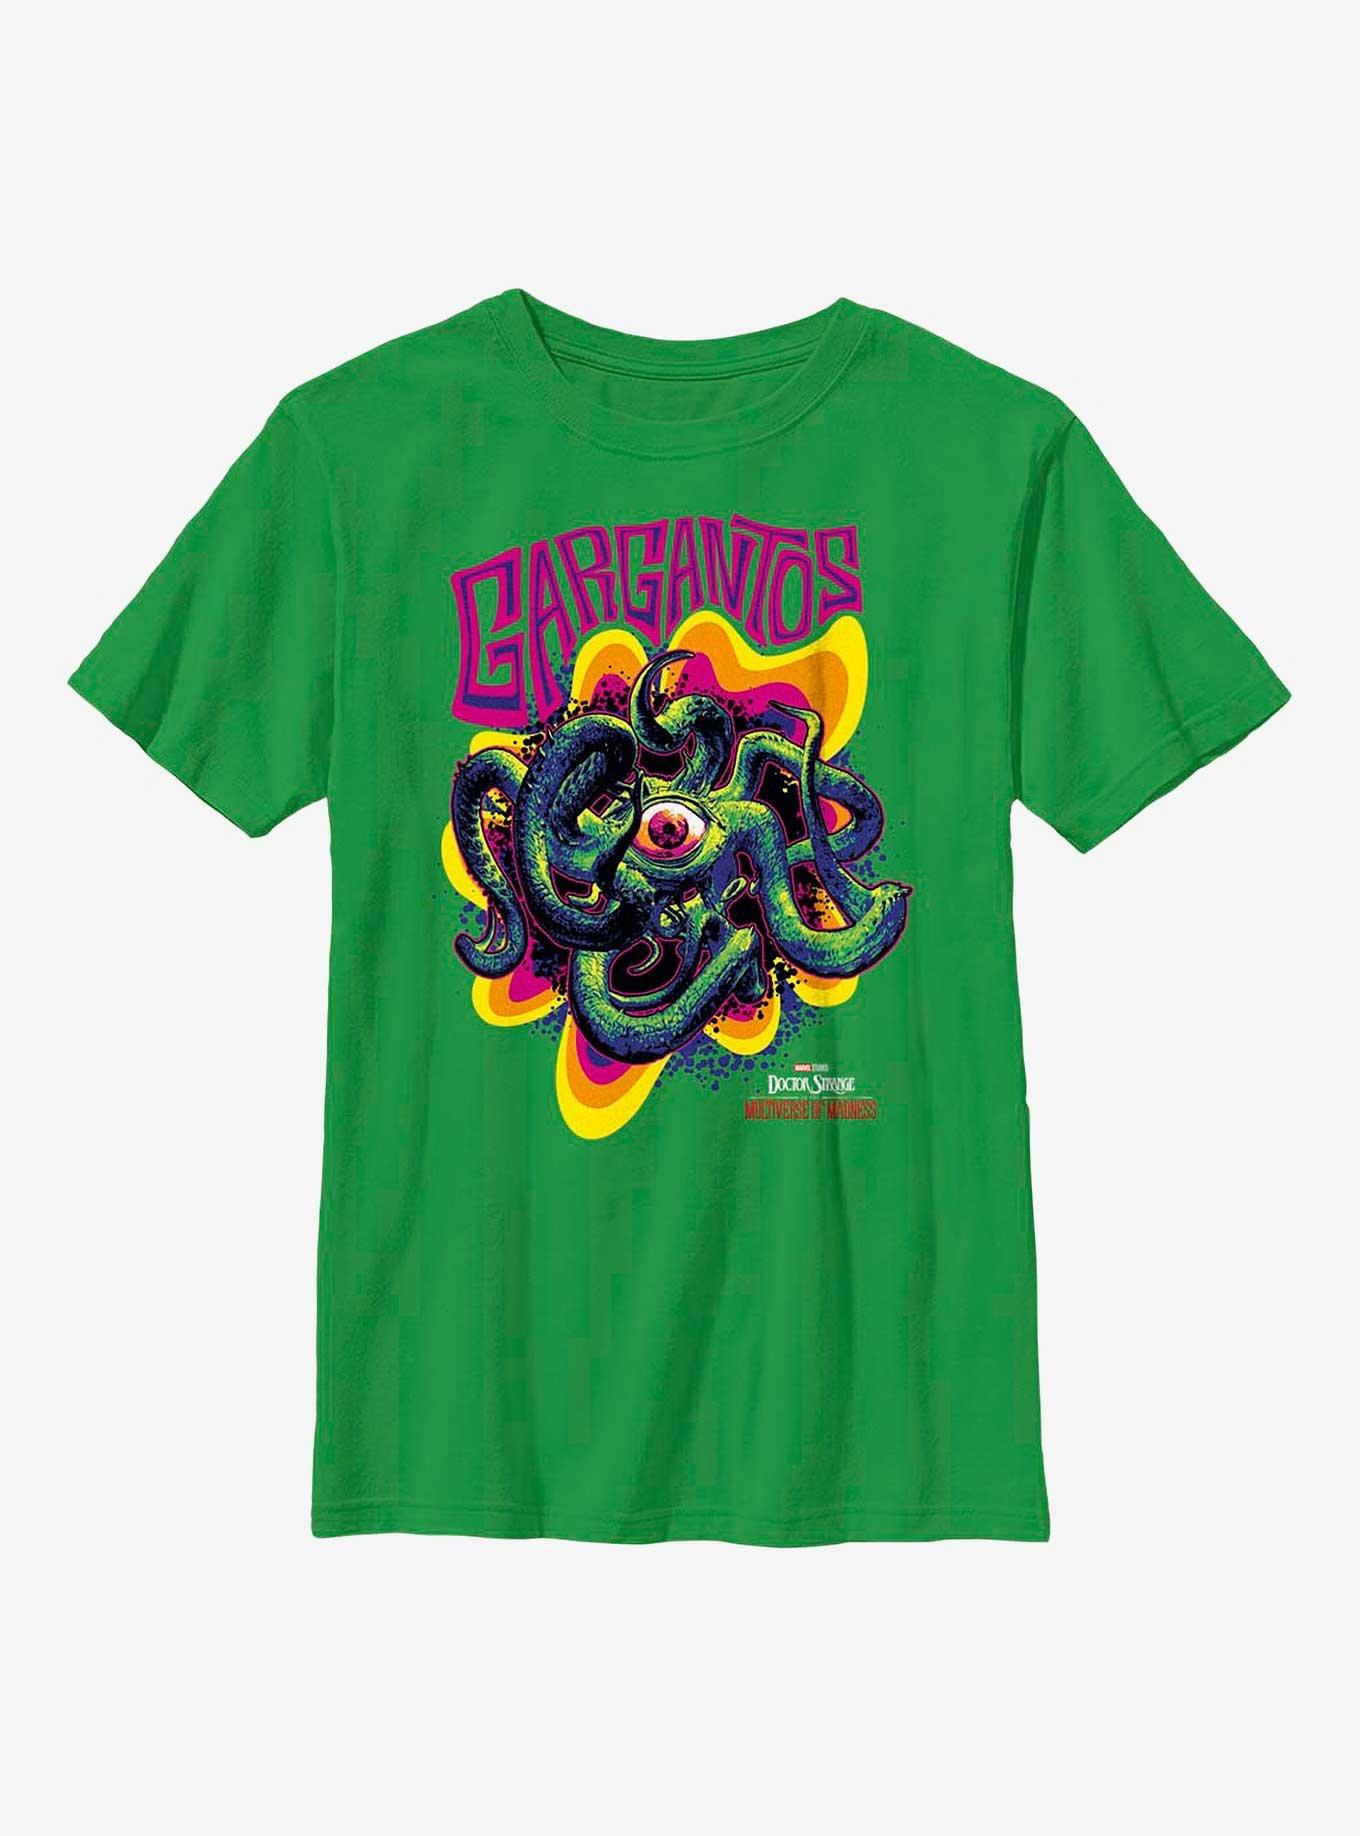 Marvel Doctor Strange Multiverse Of Madness Colorful Gargantos Youth T-Shirt, KELLY, hi-res